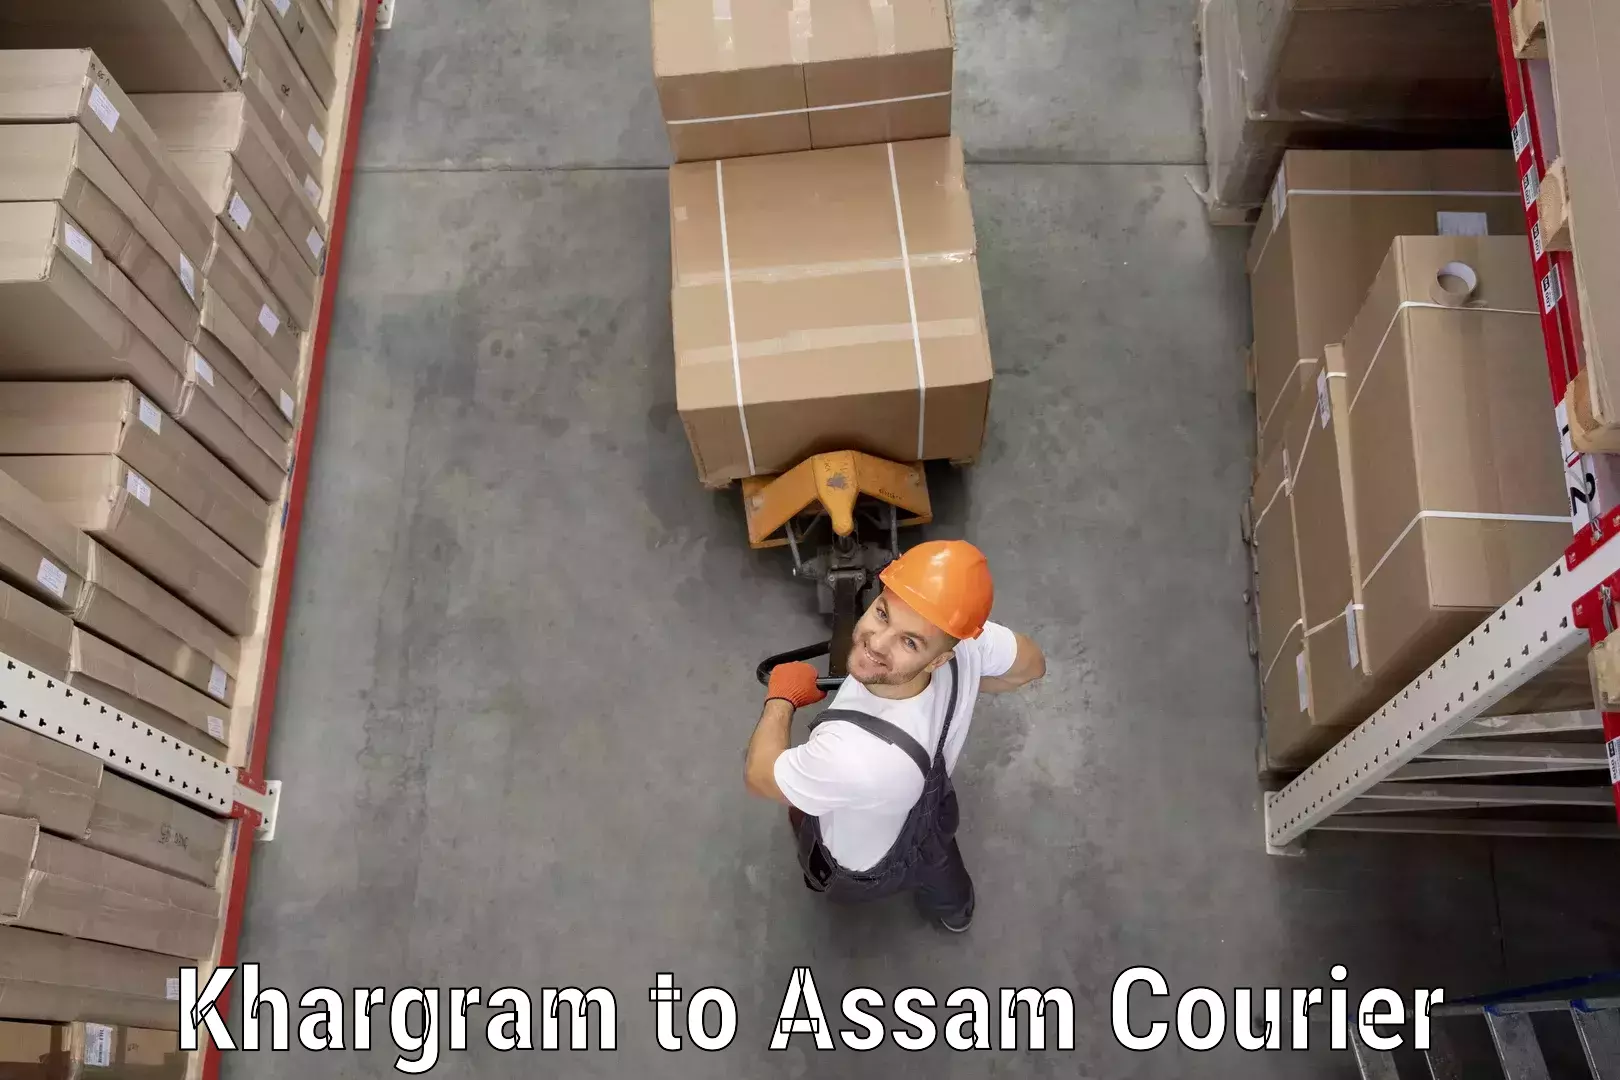 Advanced shipping technology Khargram to Rupai Siding